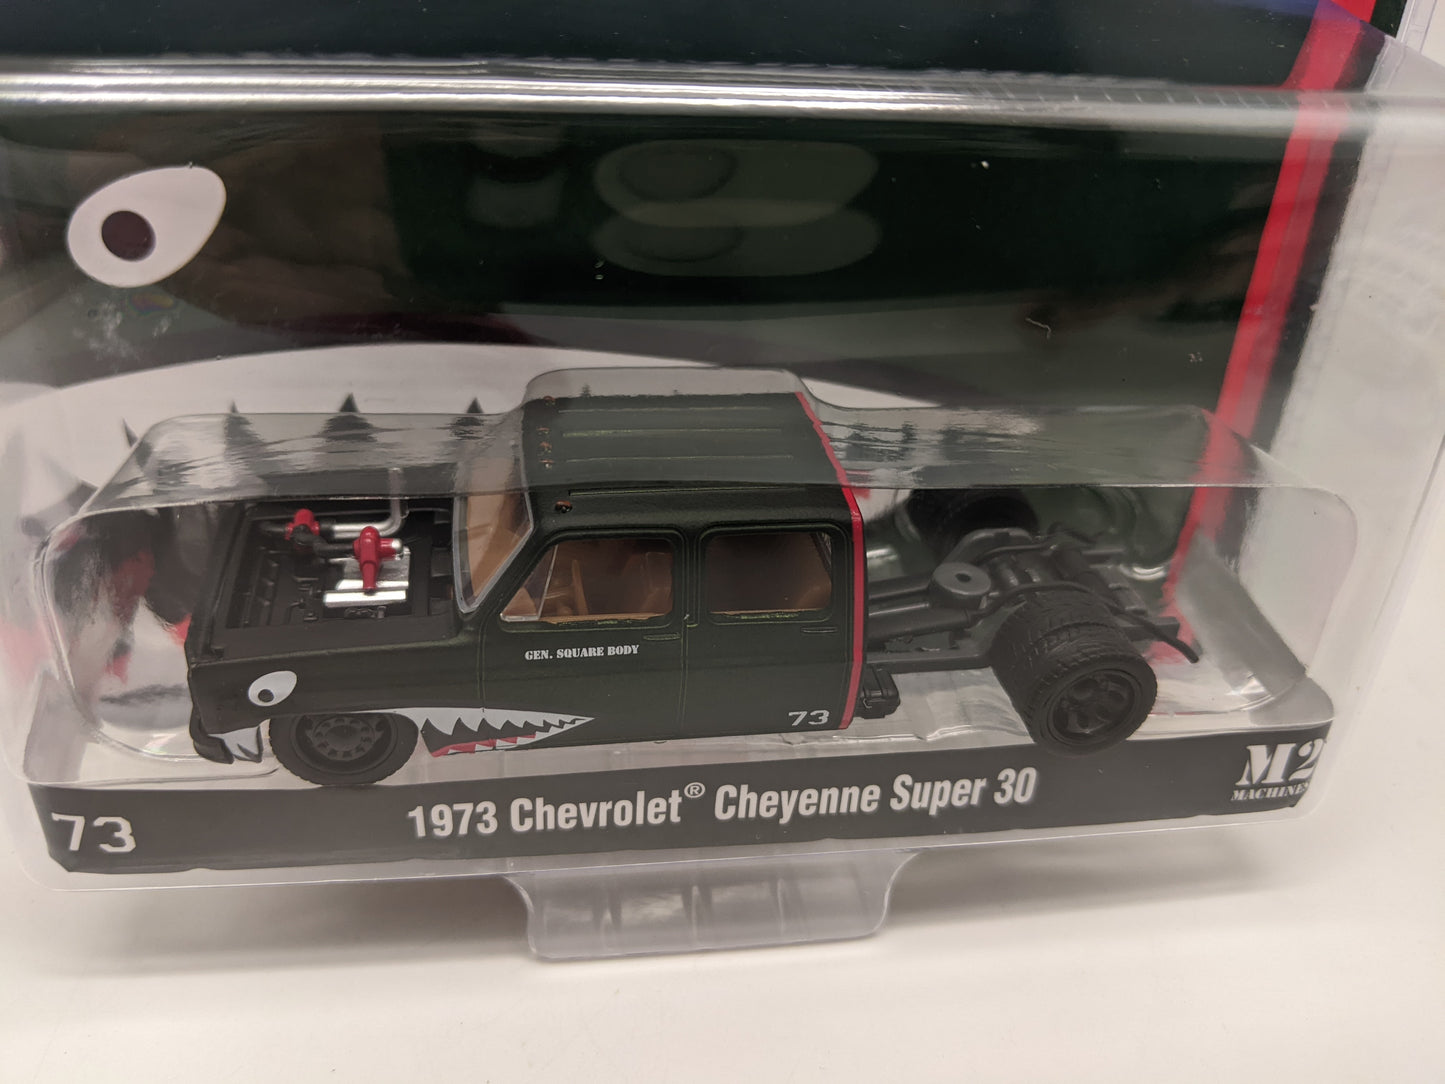 M2 1973 Chevrolet Cheyenne Super 30 - Gen. Square Body